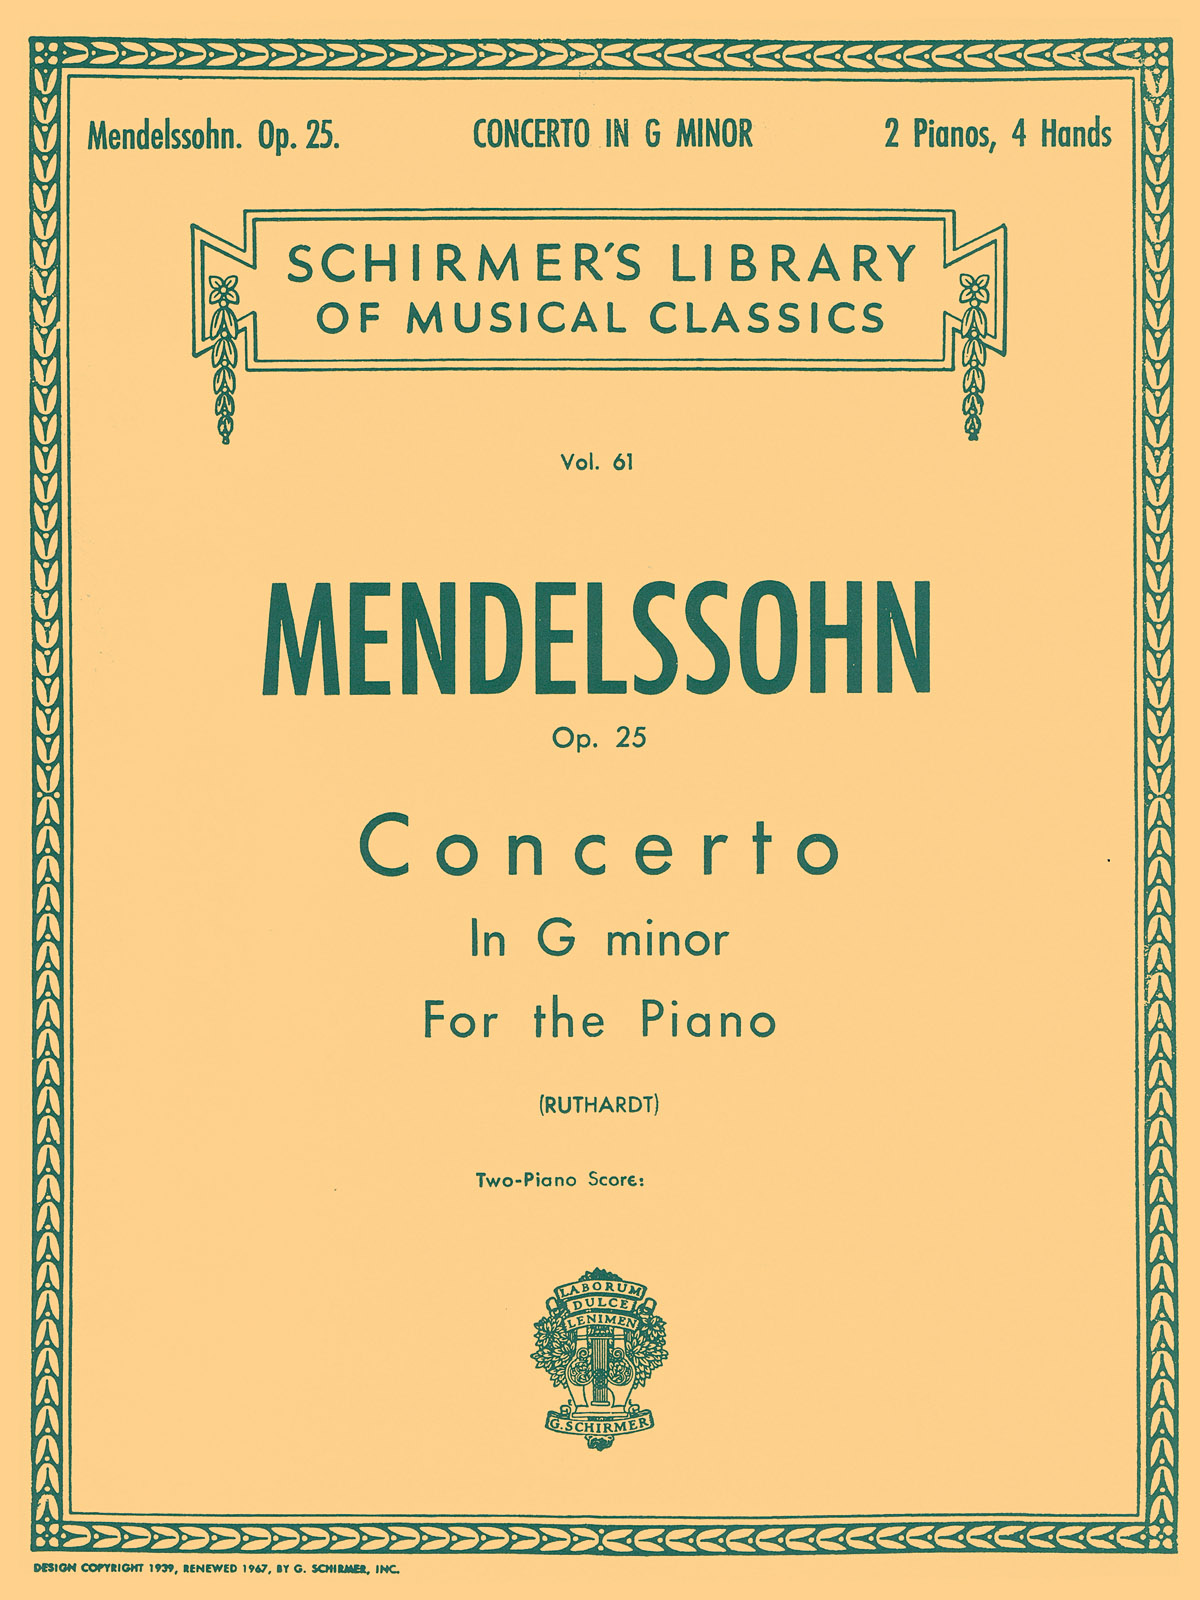 Felix Mendelssohn Bartholdy: Concerto No. 1 in G Minor, Op. 25